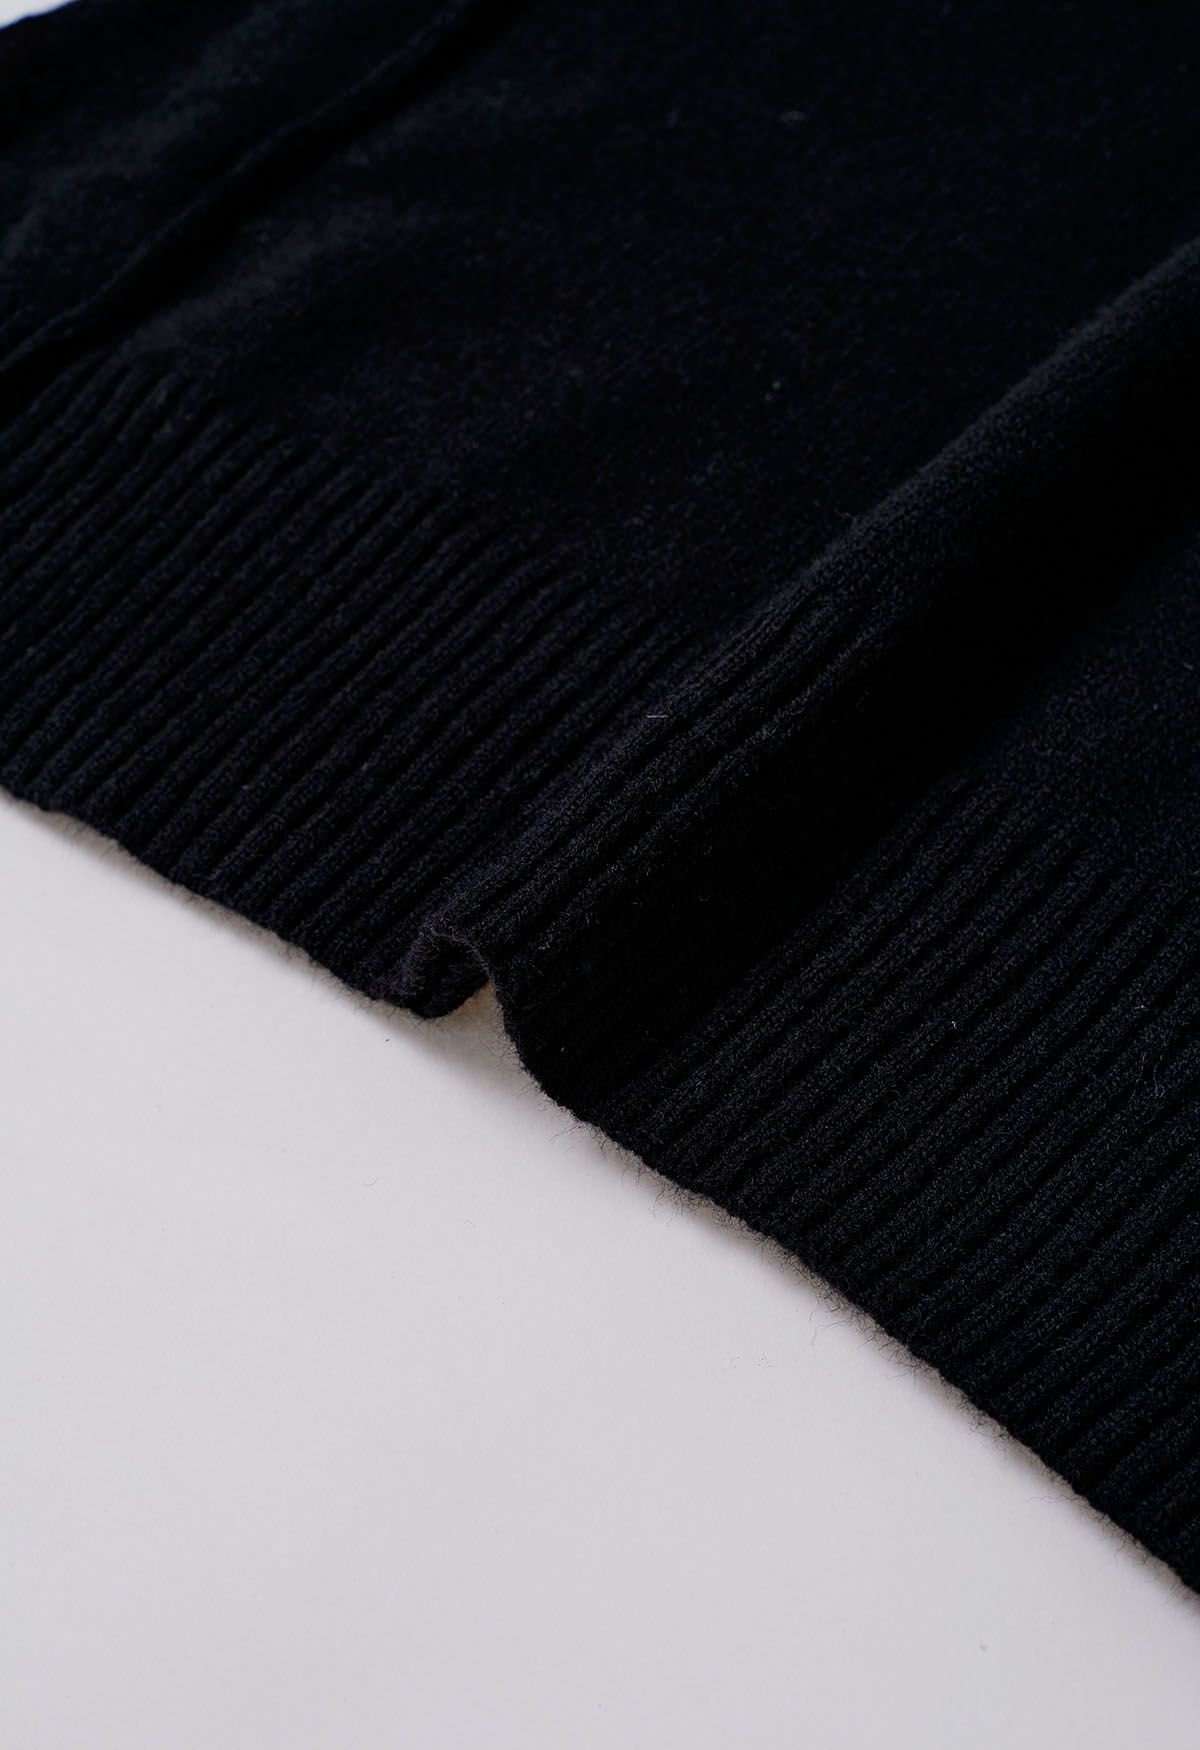 Dropped Shoulder Side Slit Slouchy Knit Sweater in Black